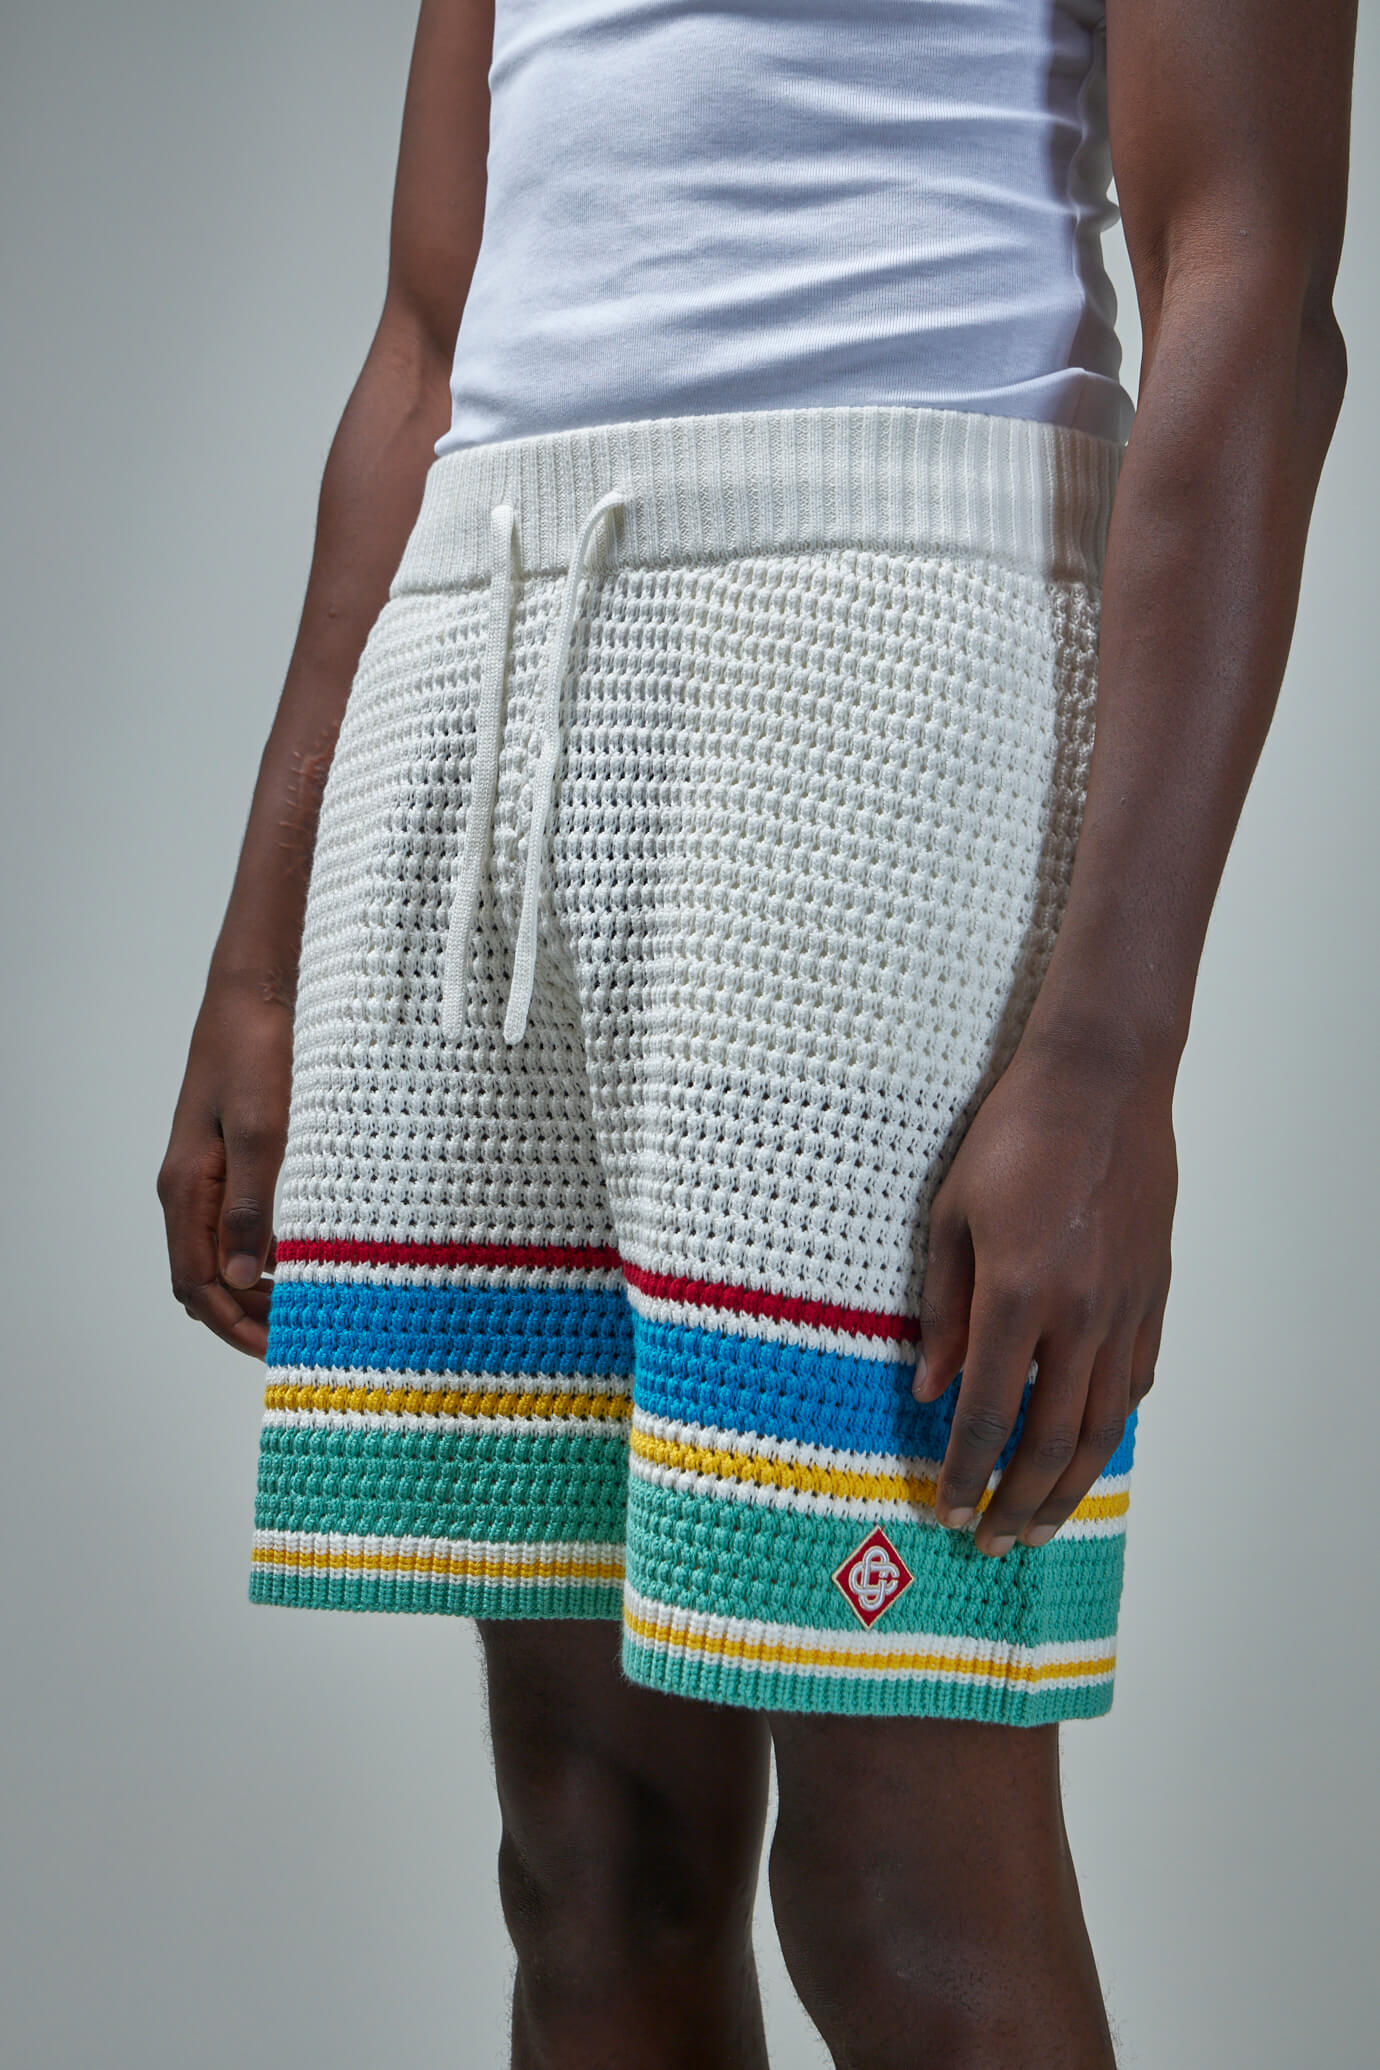 Crochet Tennis Shorts